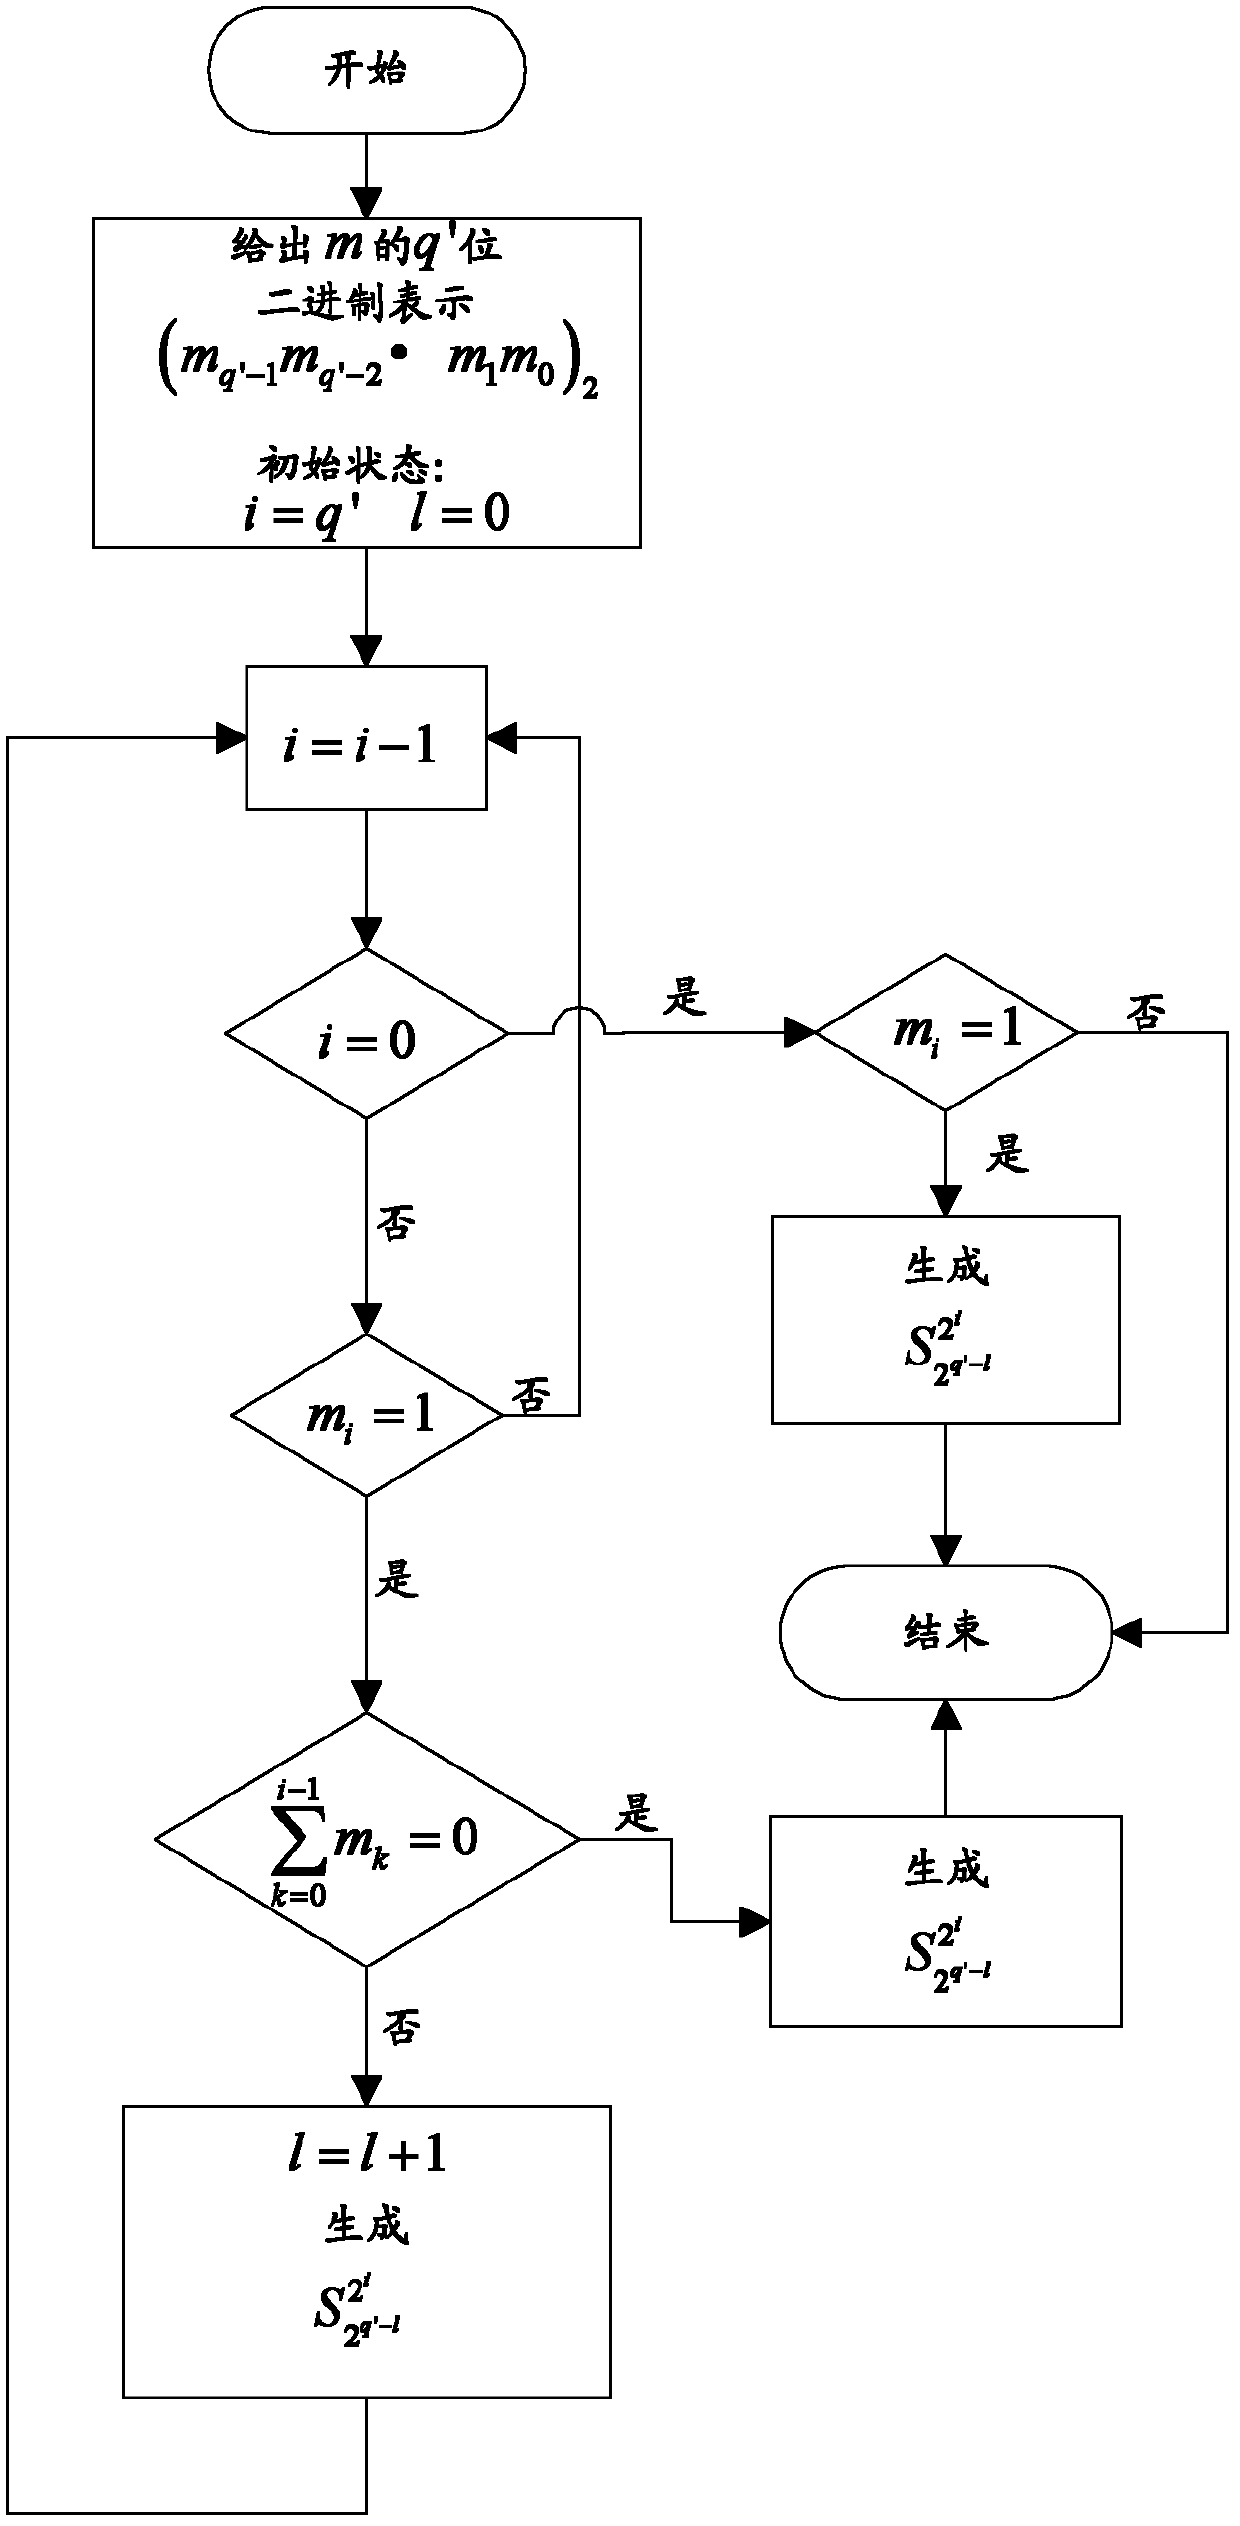 Compressed sensing observation matrix constructing method based on sparse Hadamard matrix